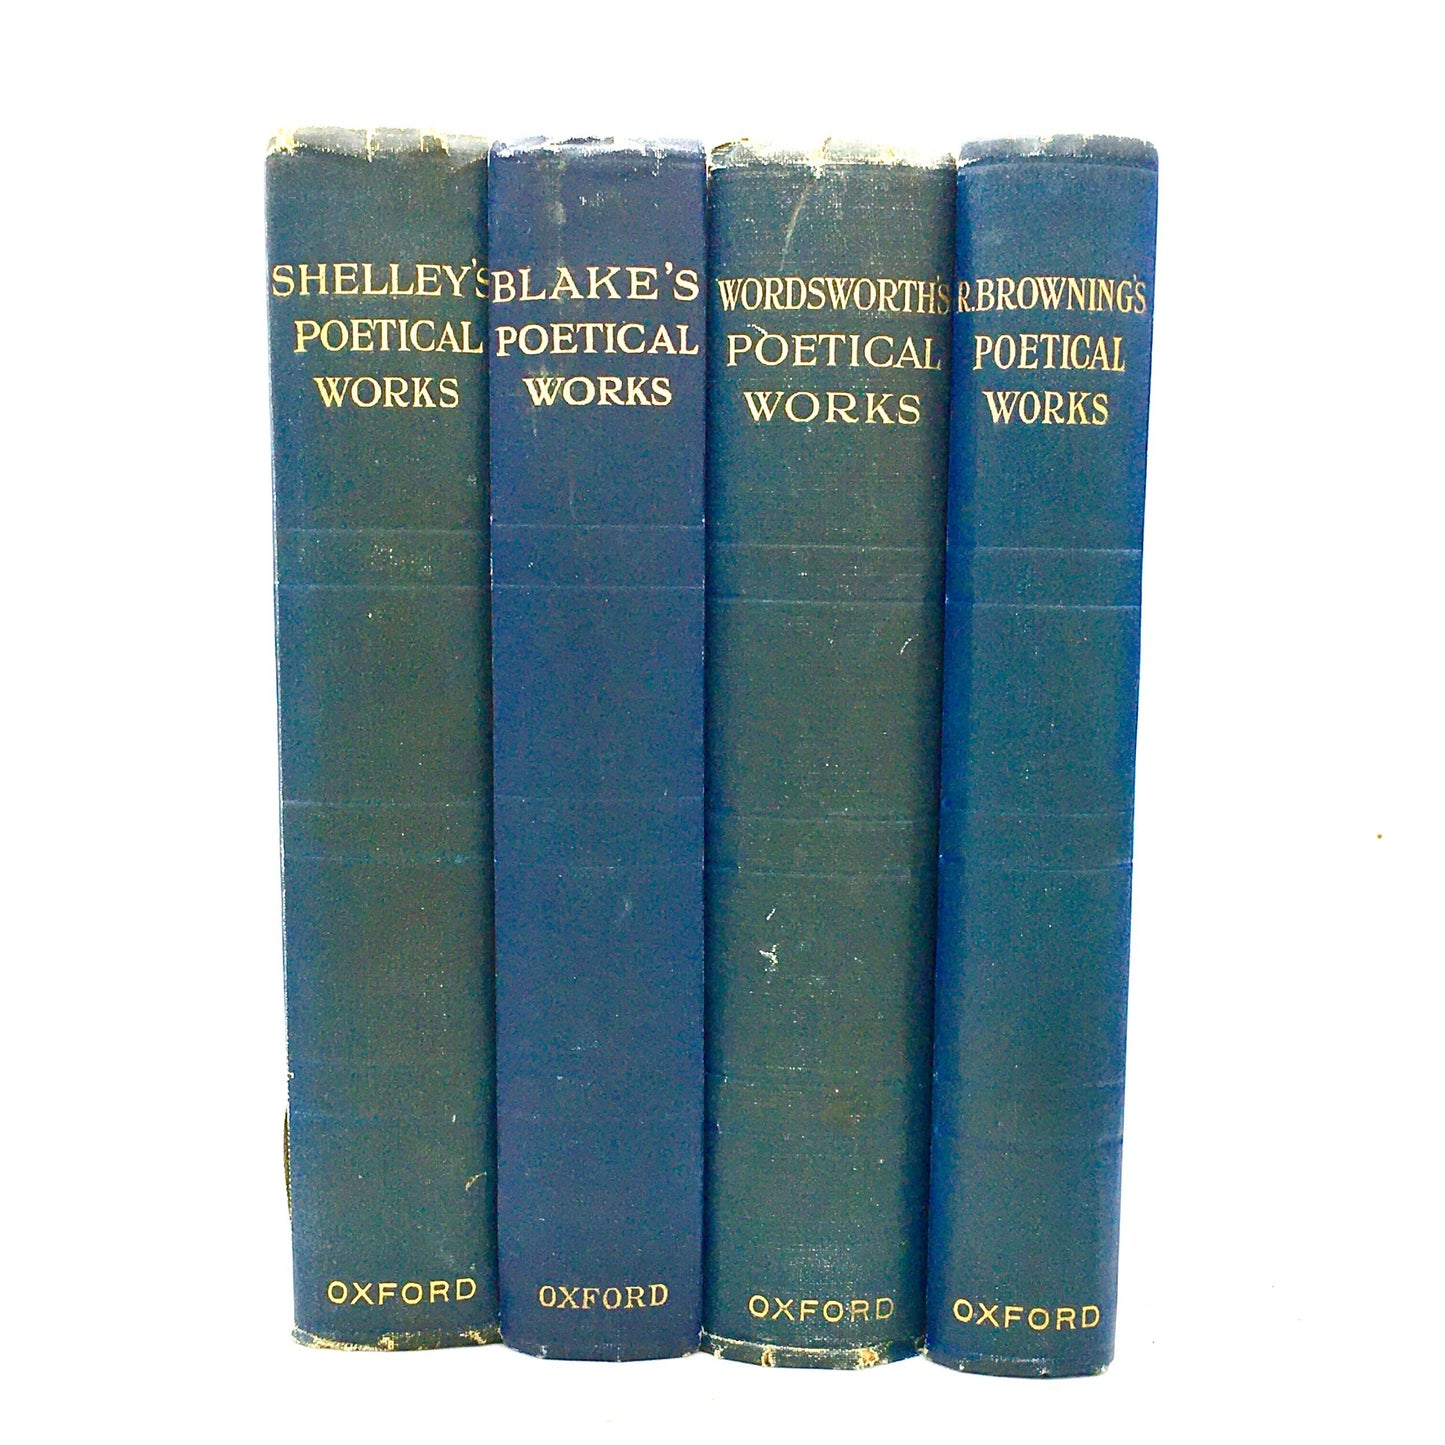 VARIOUS 4 Volume Poetry Set - Shelley, Browning, Wordsworth, Blake [Oxford University Press, 1923-25] - Buzz Bookstore